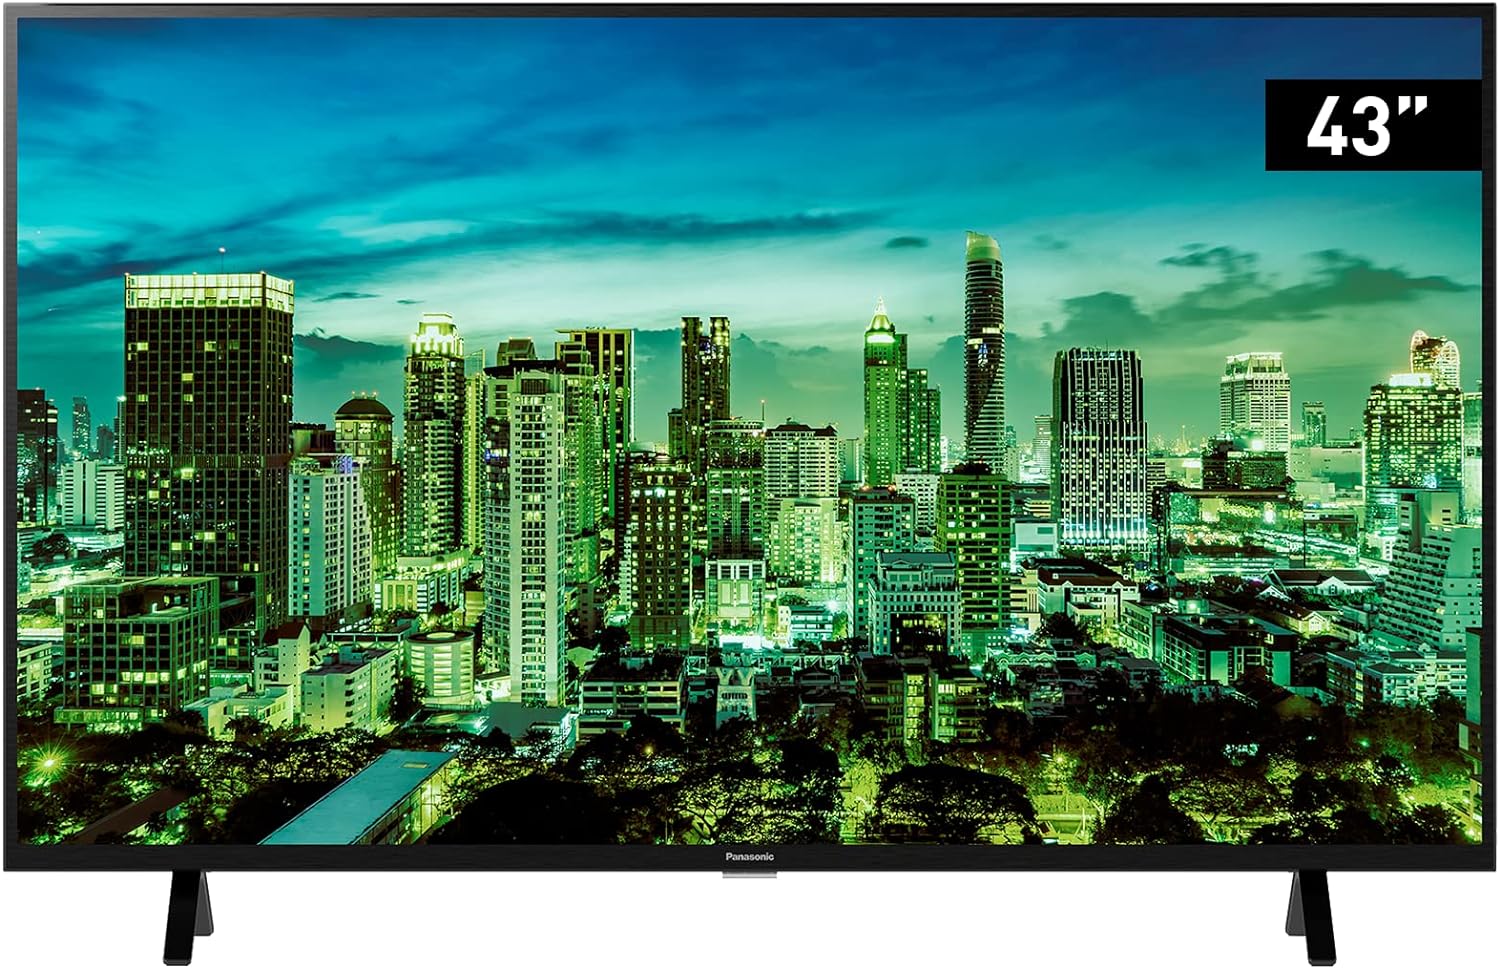 Panasonic TX-43LXW704 108 cm LED-tv (43 inch, HDR Bright Panel, 4K Ultra HD, Triple Tuner, HDMI, USB, Smart TV), zwart